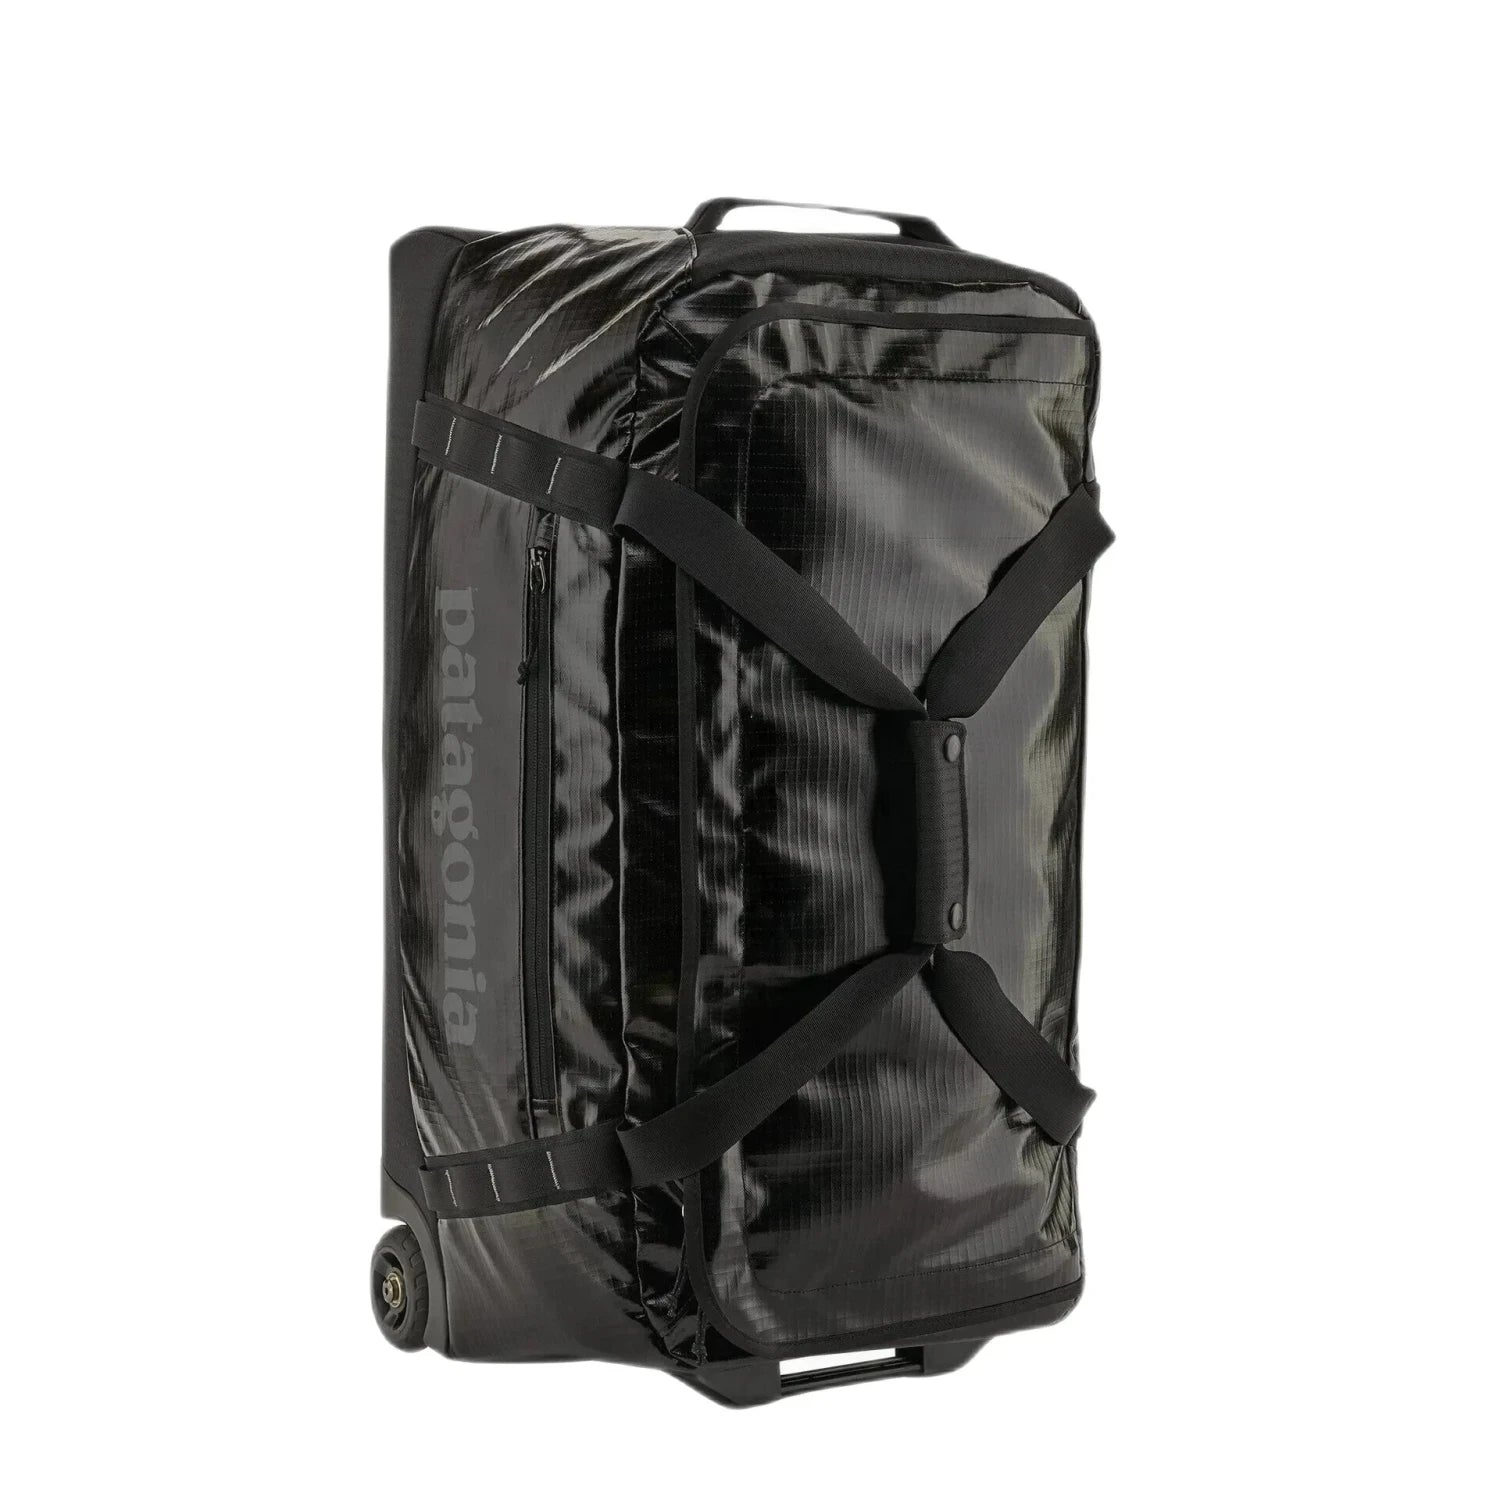 Patagonia Black Hole® Wheeled Duffel Bag 70L, Black, front view 